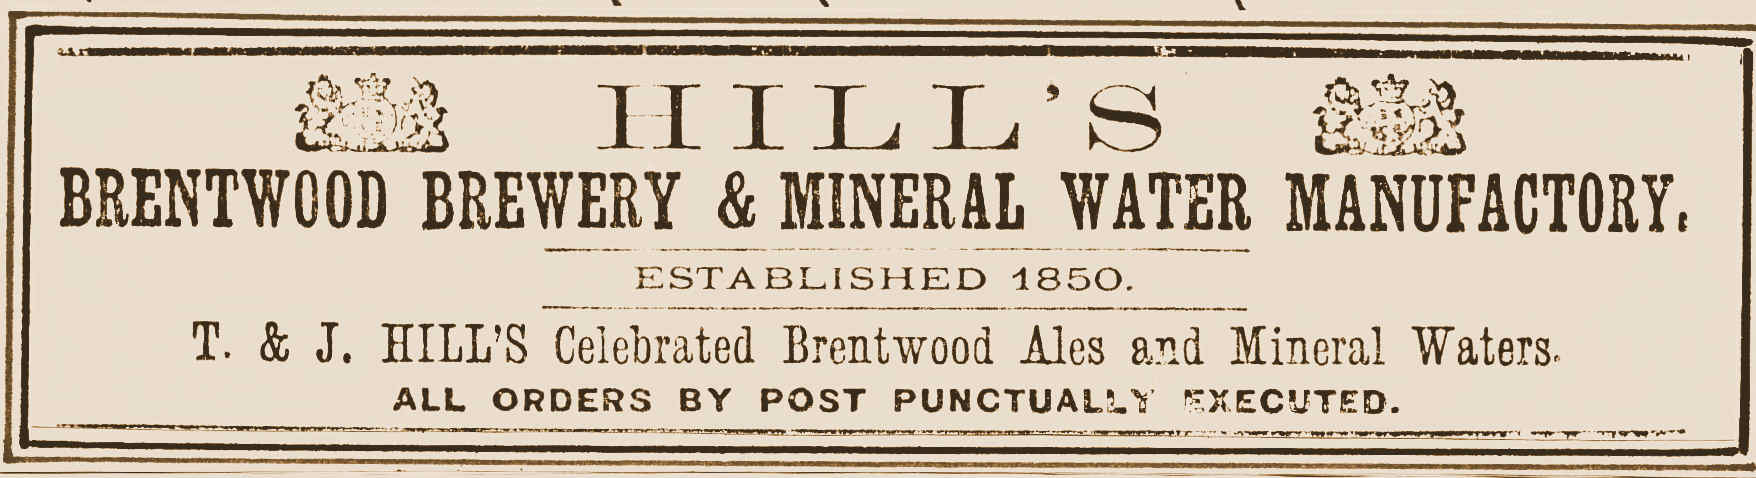 Hills Brentwood ad 1880.jpg